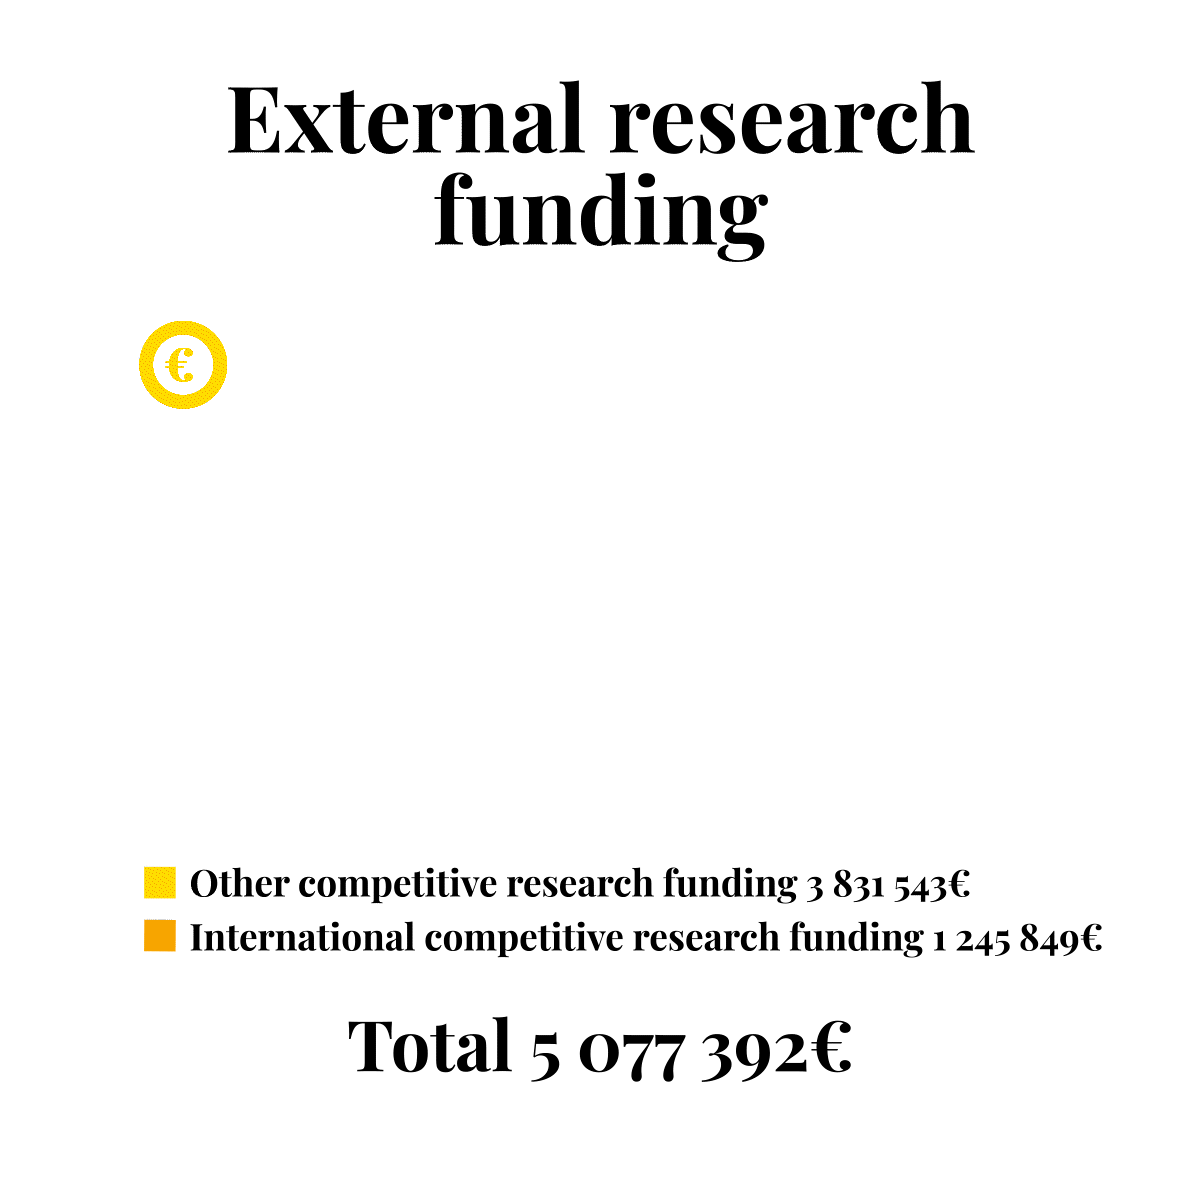 External research funding at the University of Vaasa 2022